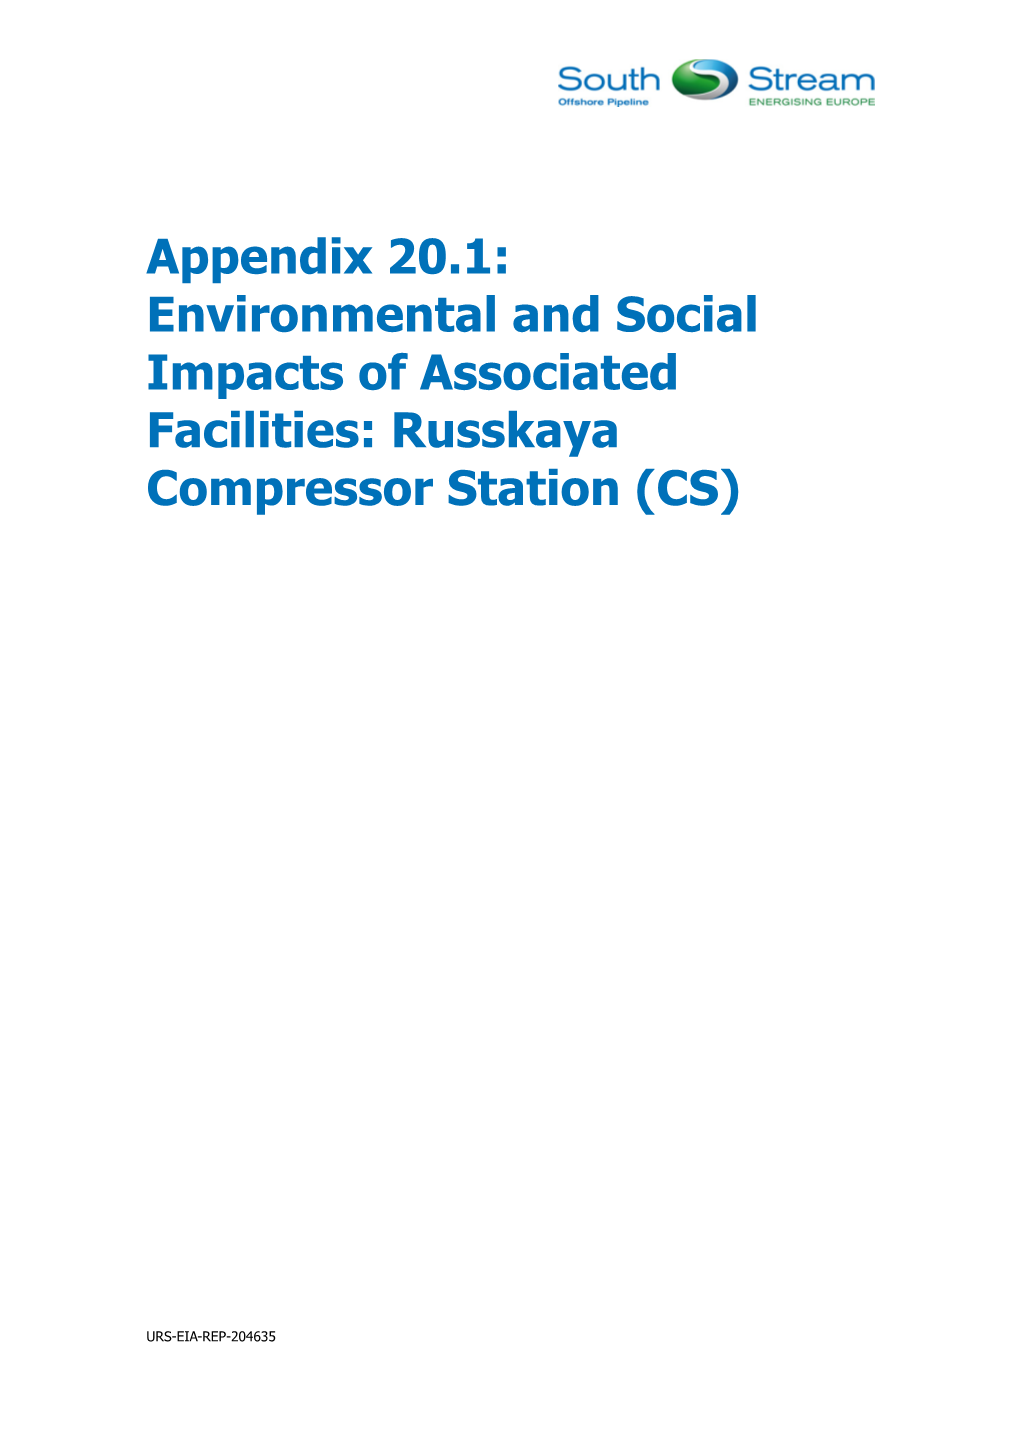 Environmental and Social Impacts of Associated Facilities: Russkaya Compressor Station (CS)